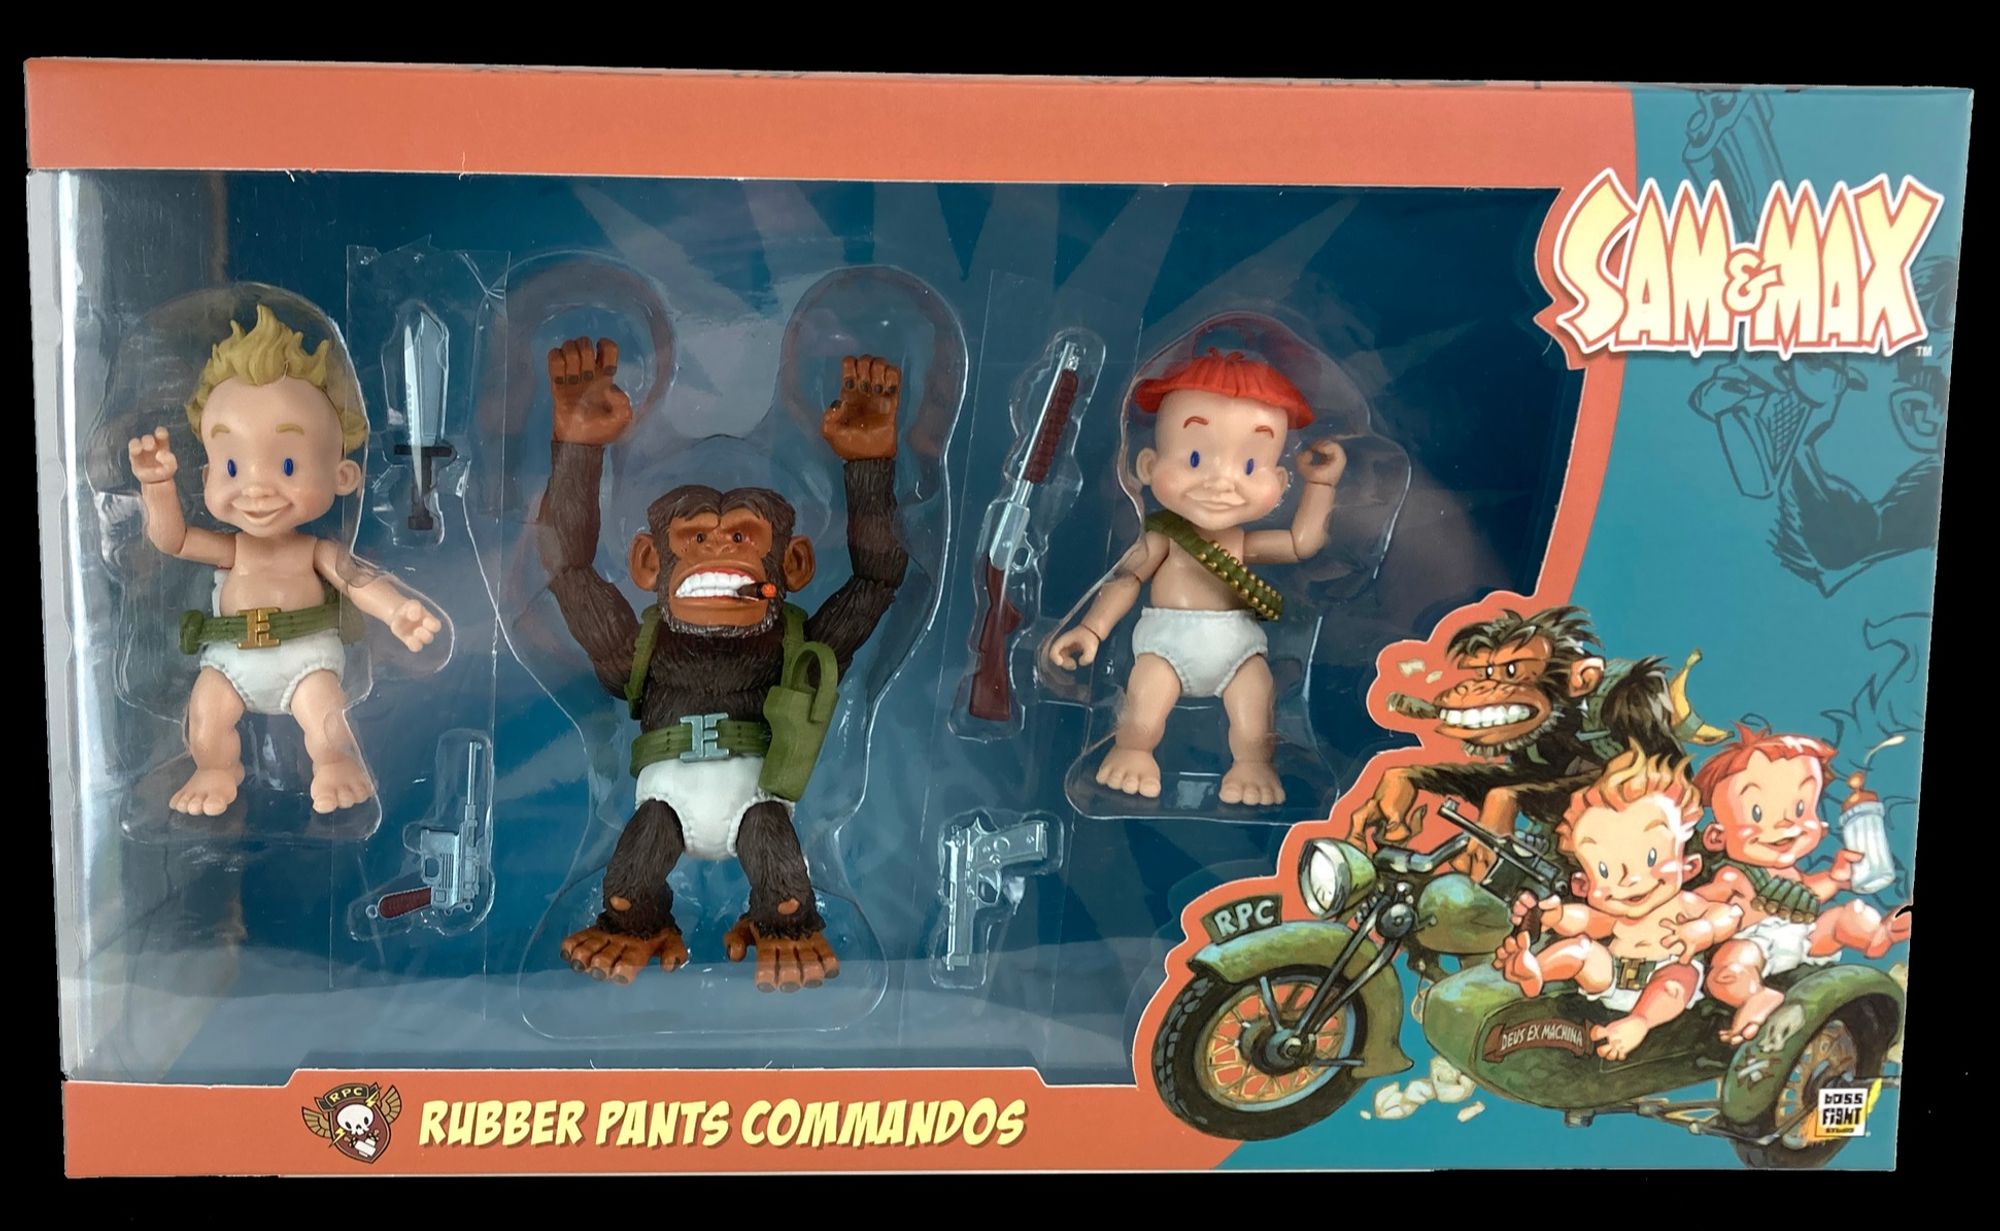 The Rubber Pants Commandos, Sam & Max Wiki